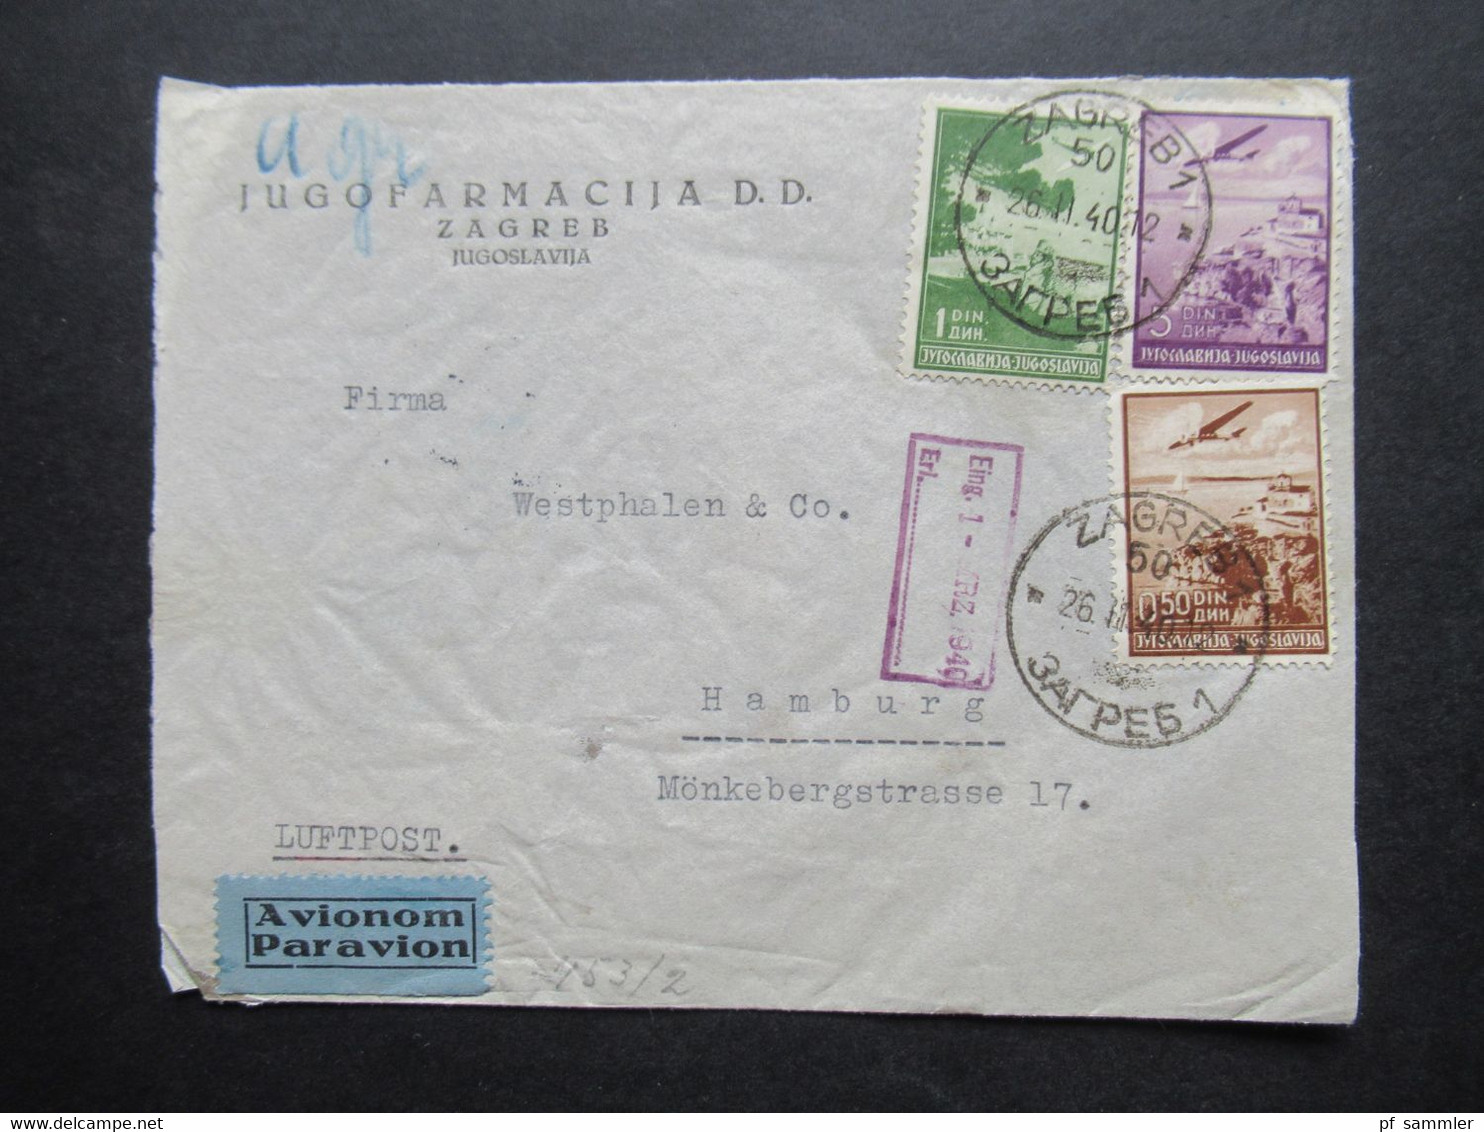 Jugoslawien 1940 Zensurbeleg / OKW Zensur / Mehrfachzensur Luftpost Jugofarmacija D.D. An Westphalen & Co. In Hamburg - Cartas & Documentos